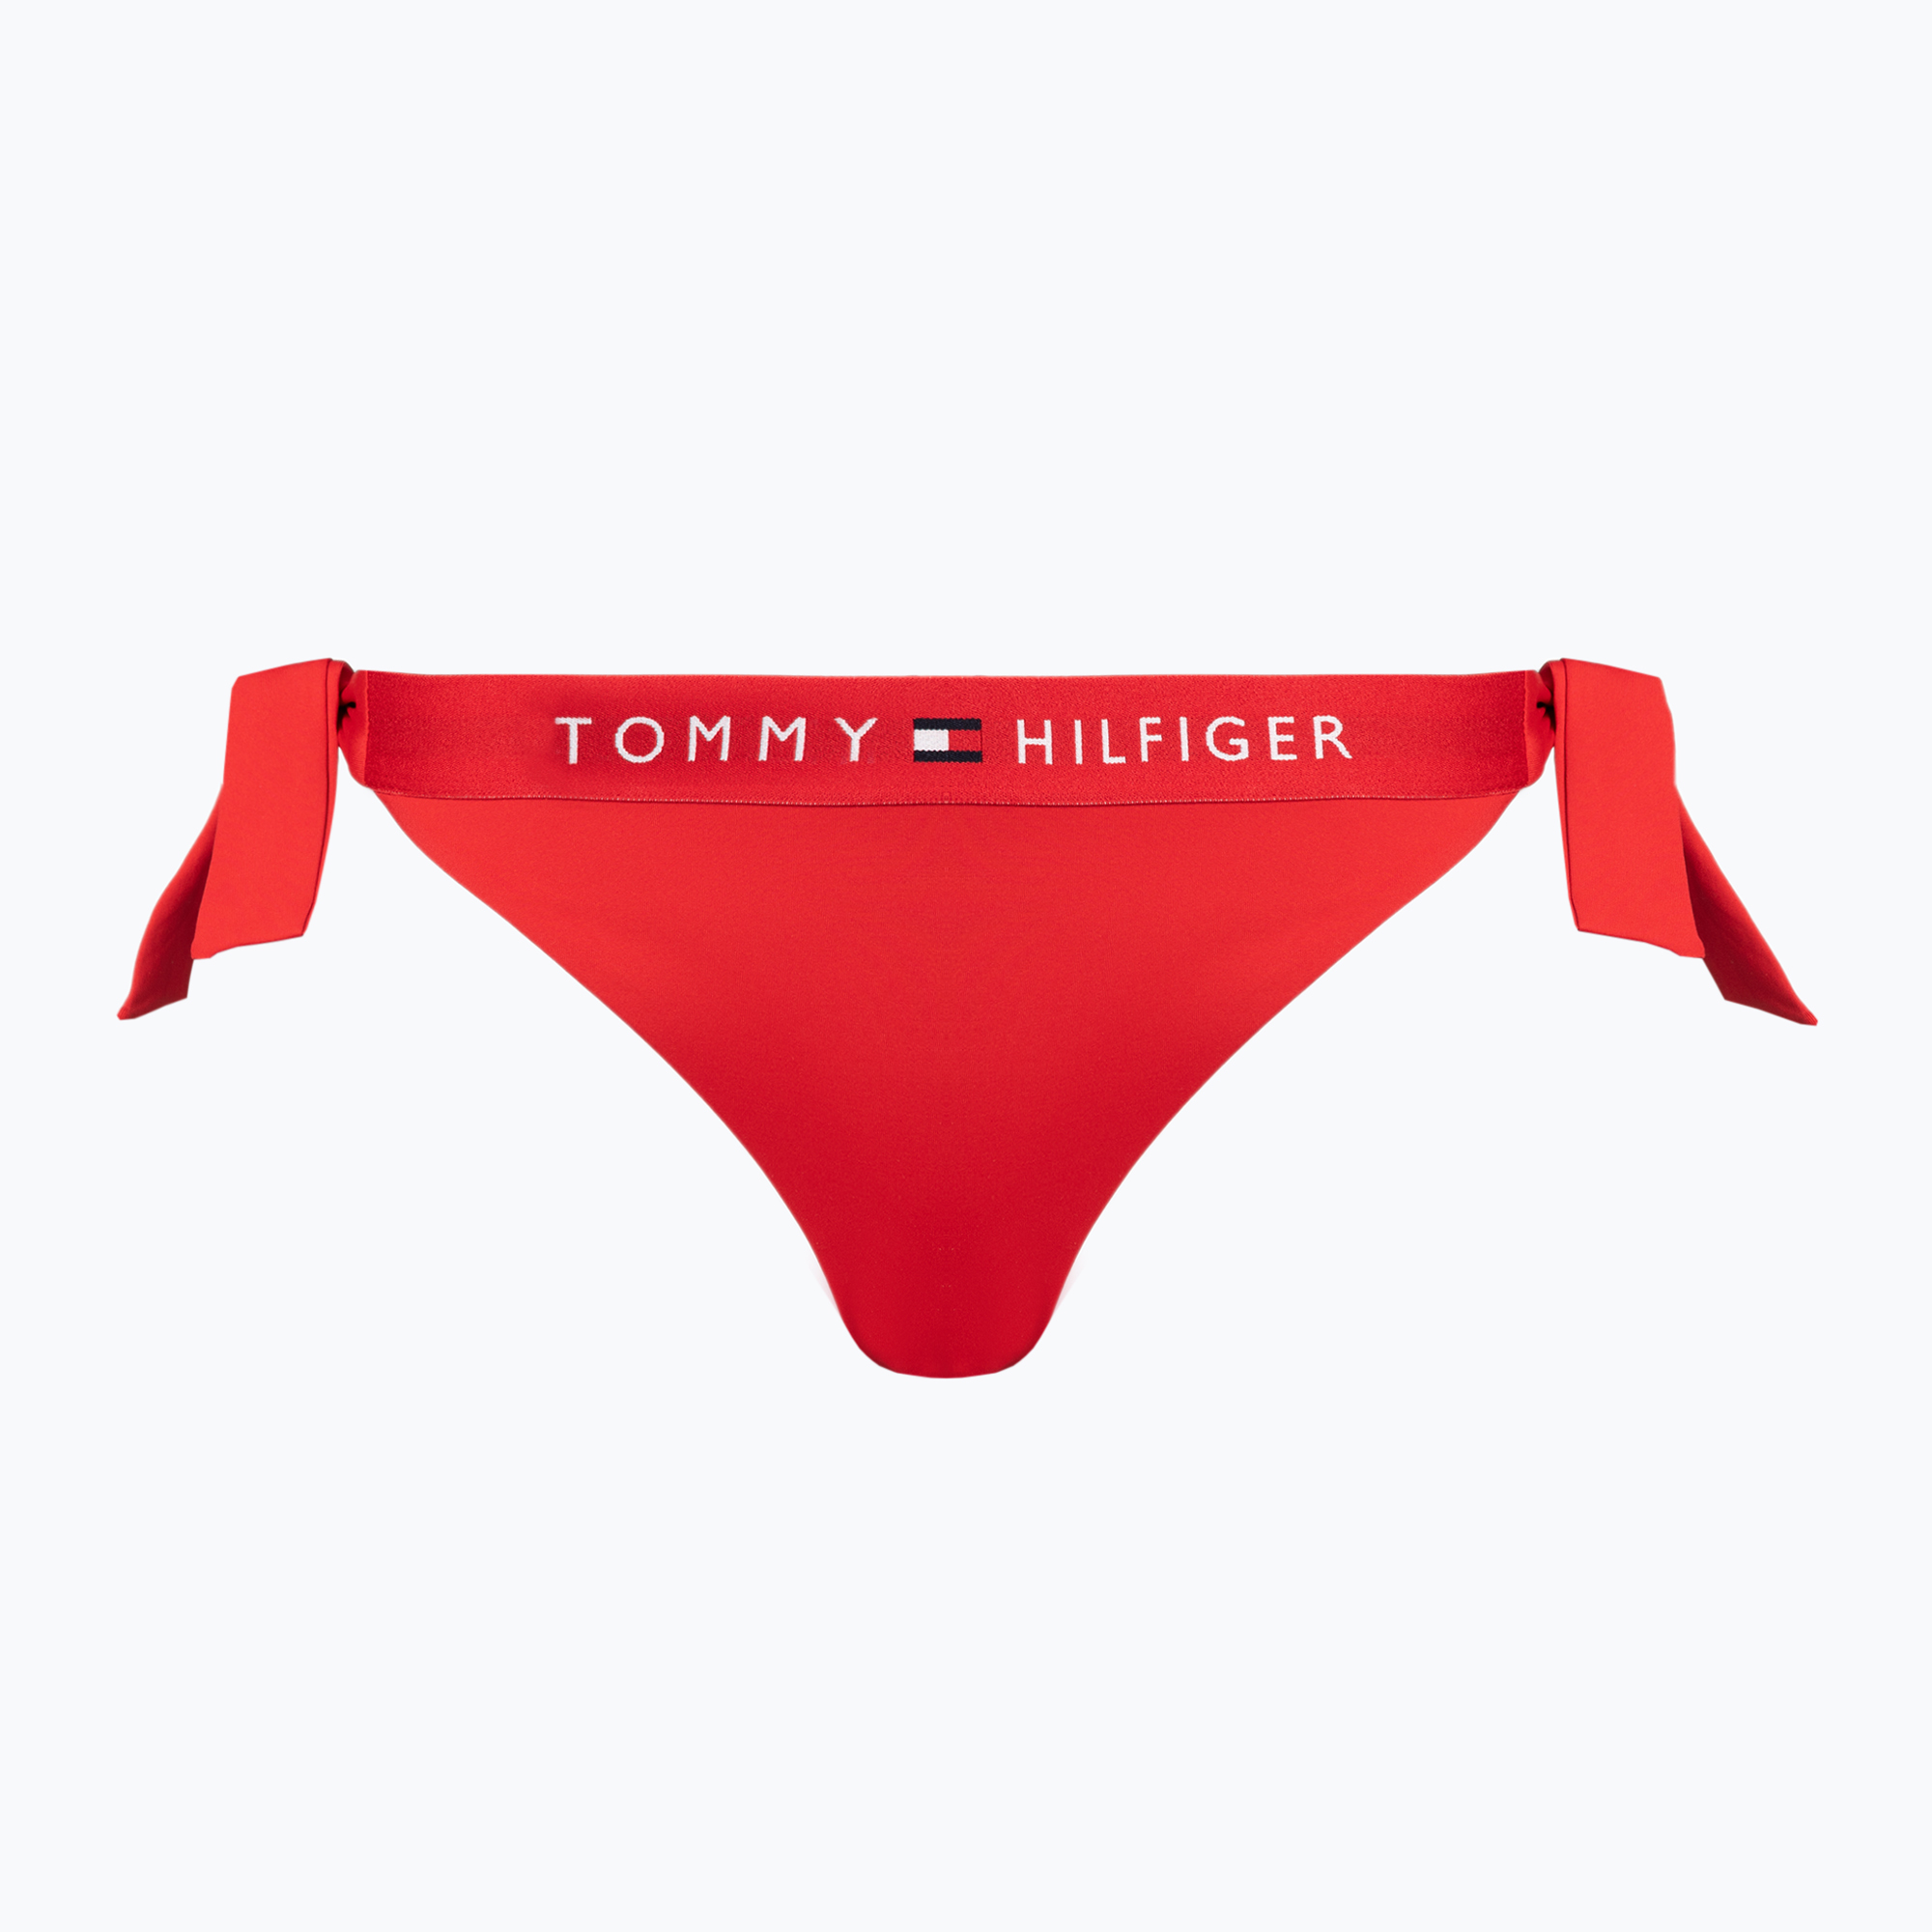 Tommy Hilfiger Side Tie Cheeky costum de baie de jos roșu